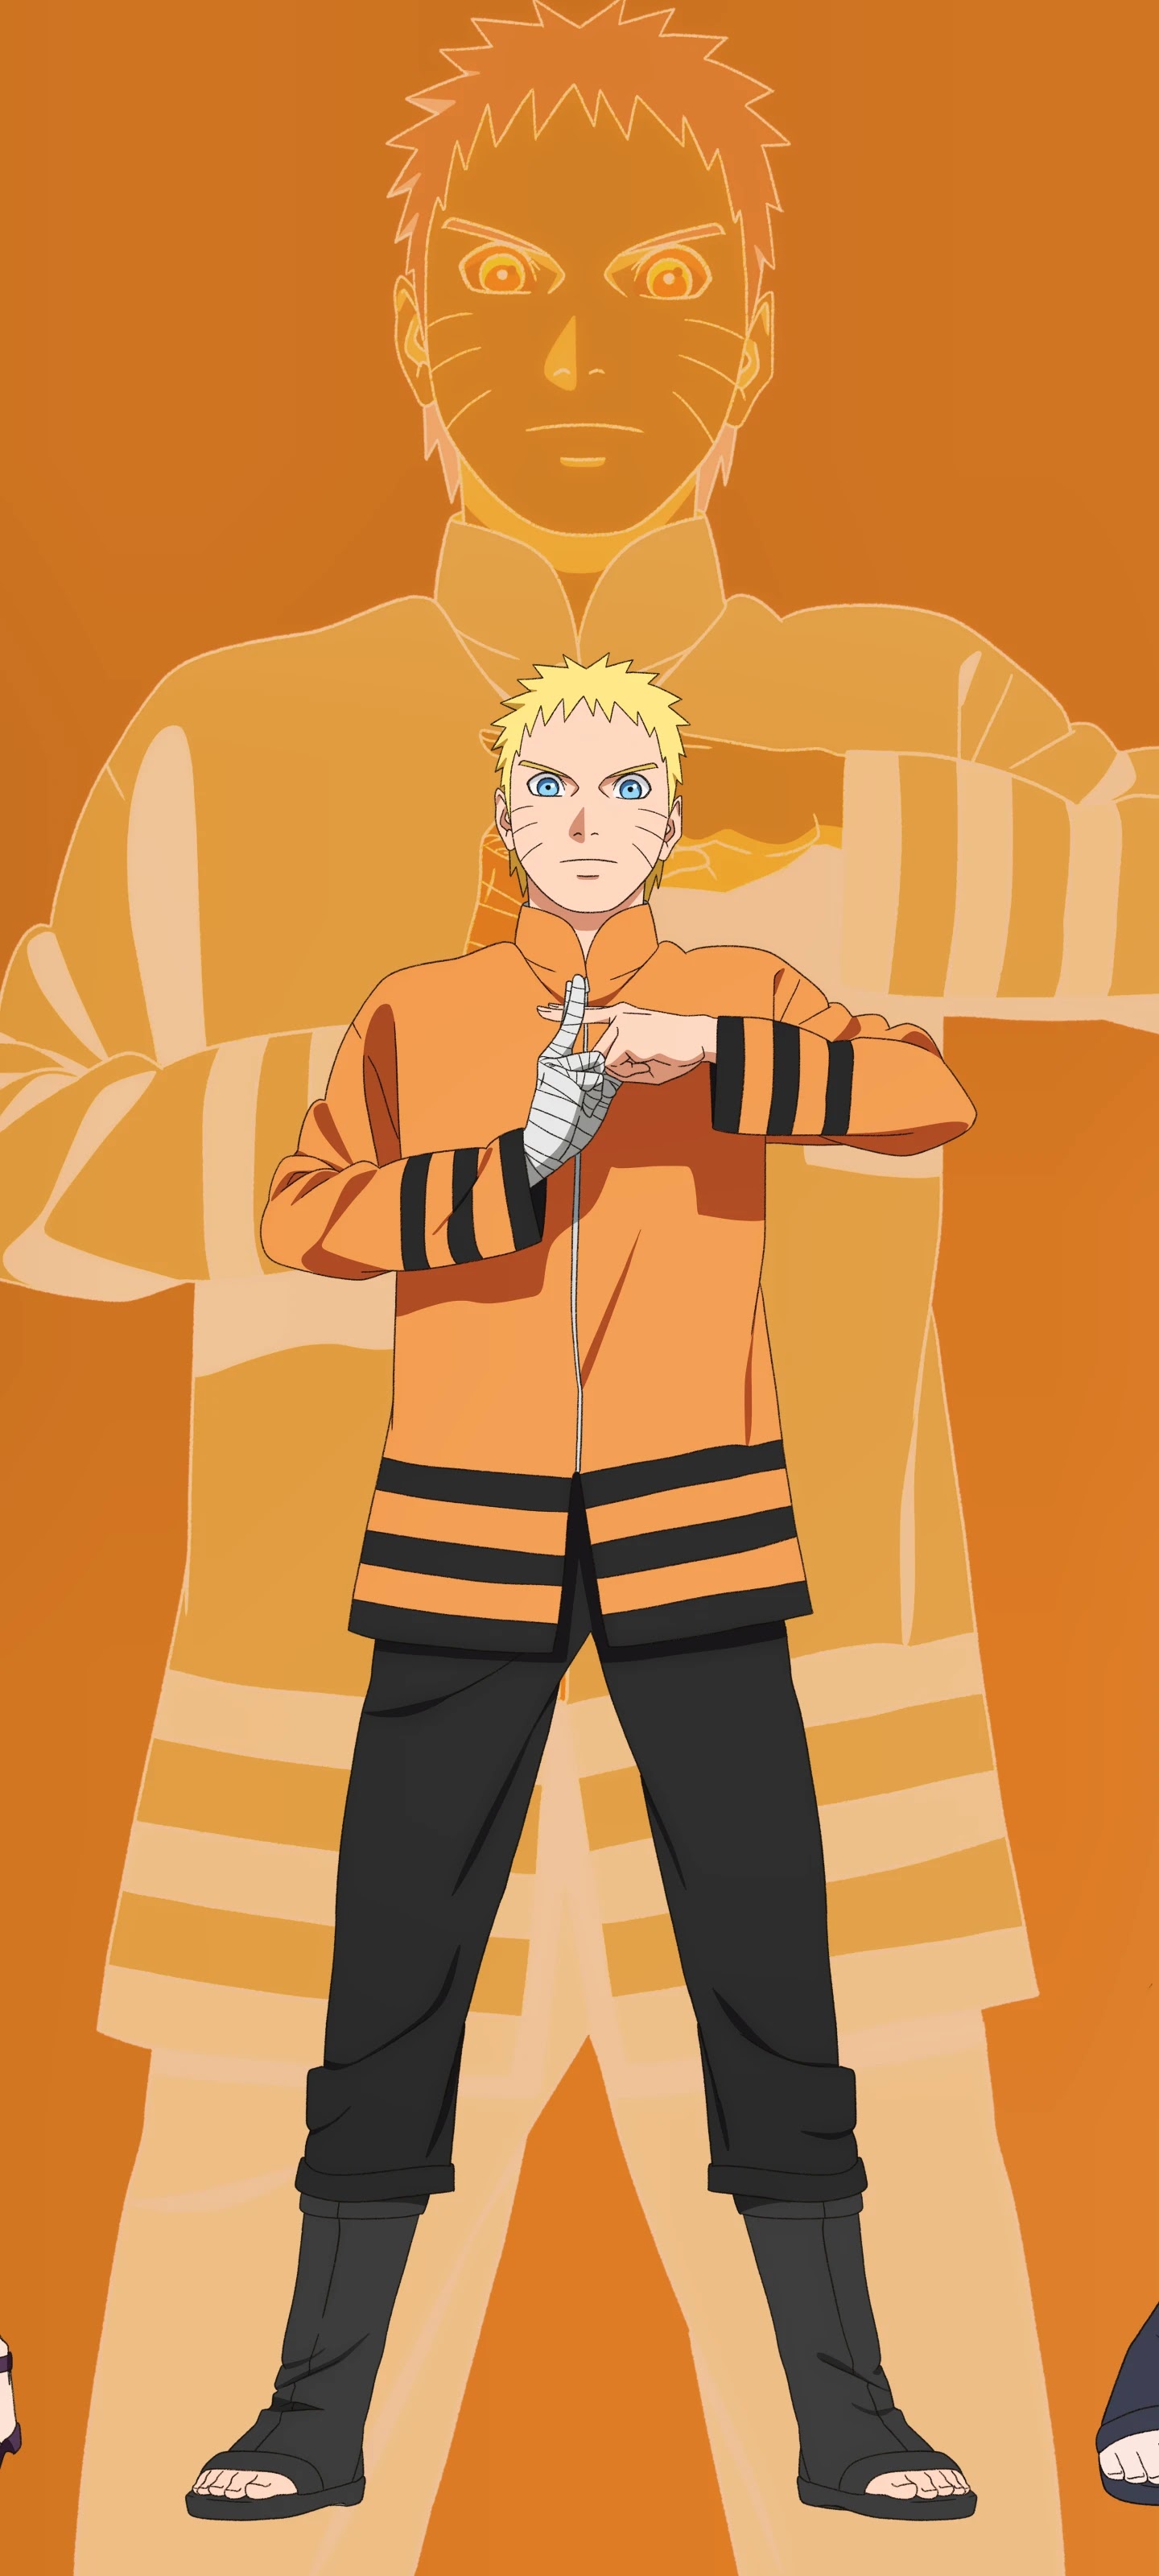 Naruto Uzumaki phone wallpaper - anime - ponselwallpaper